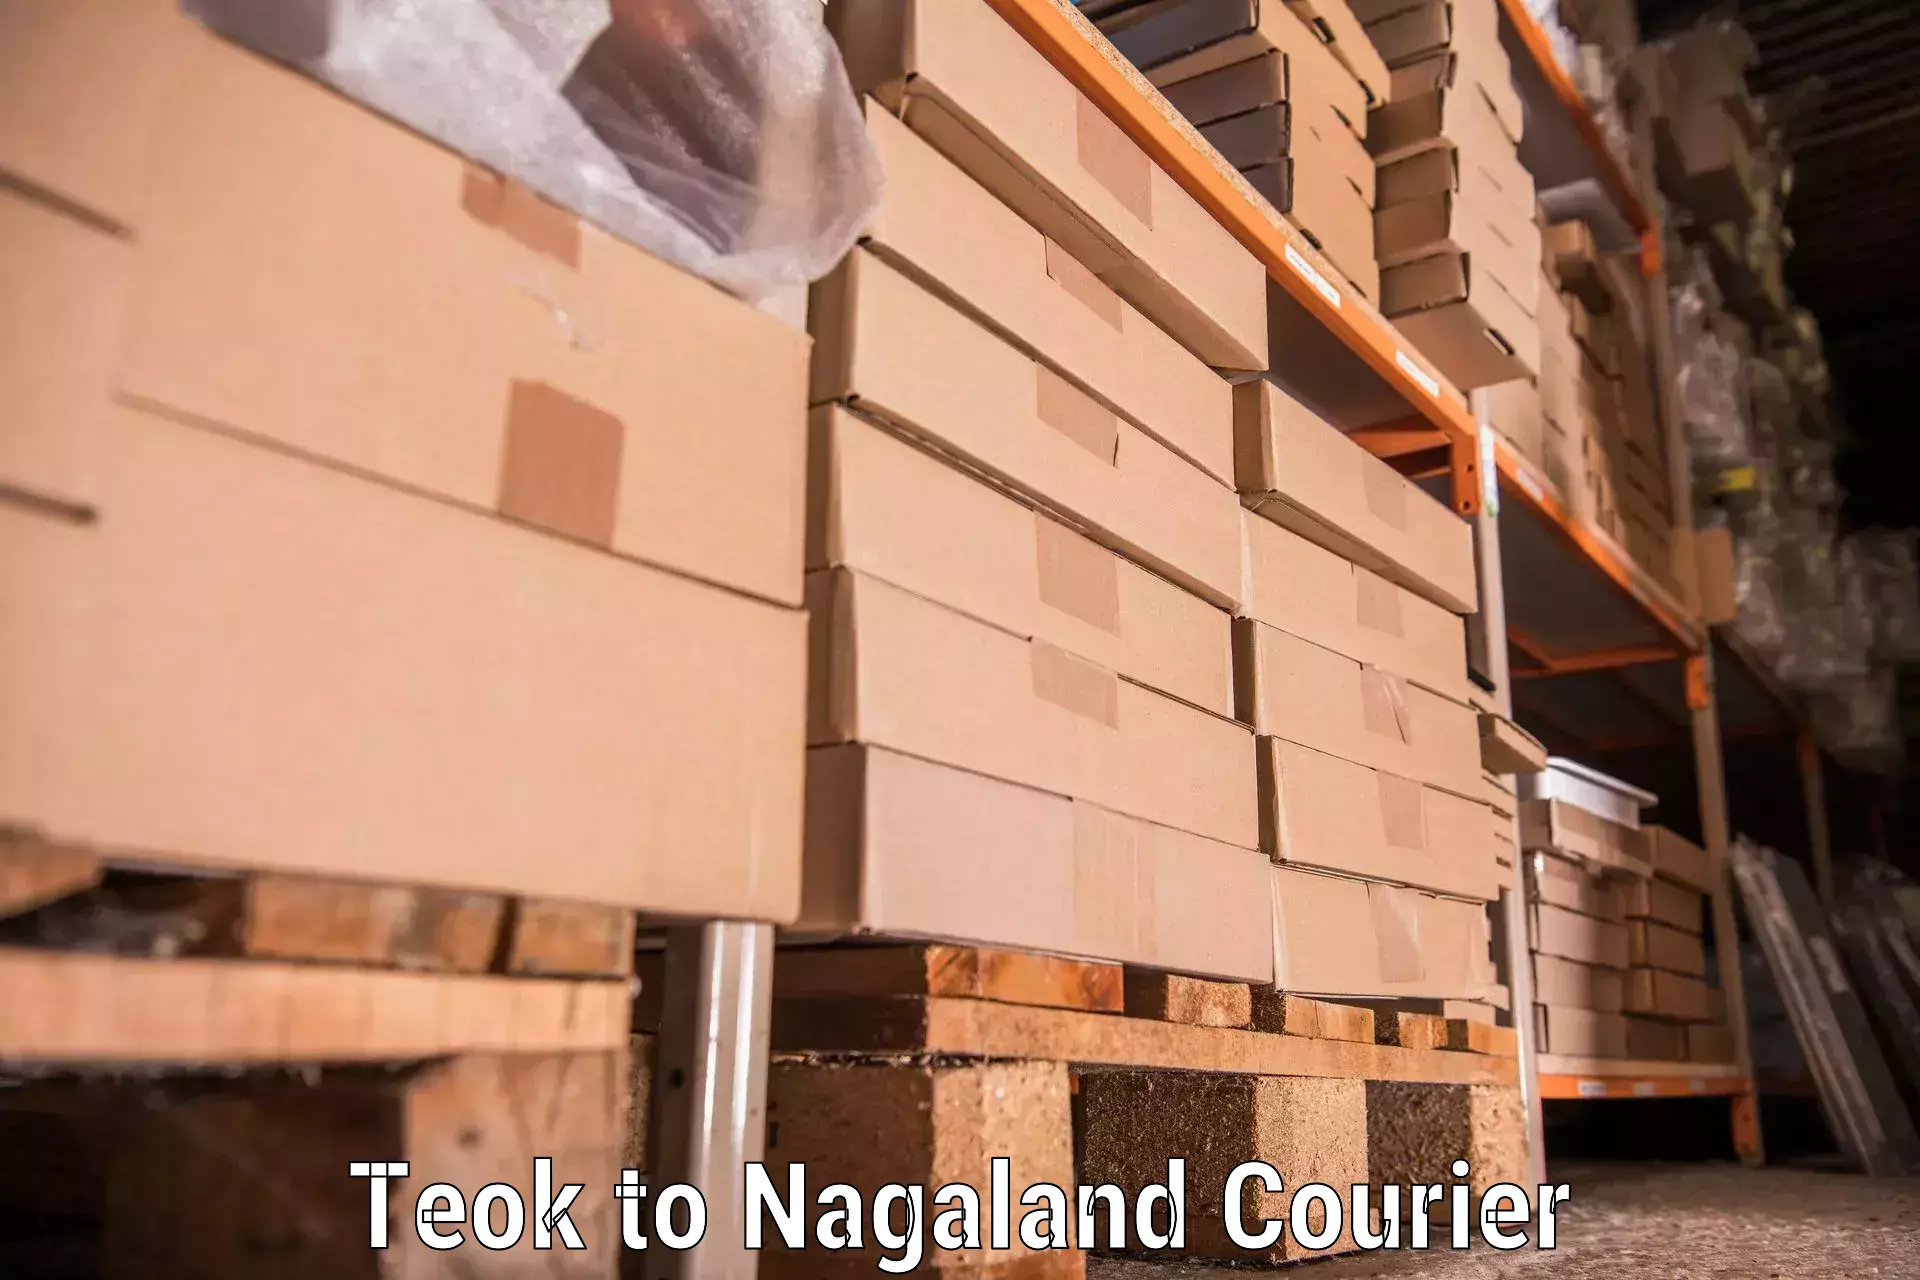 Specialized moving company Teok to Nagaland